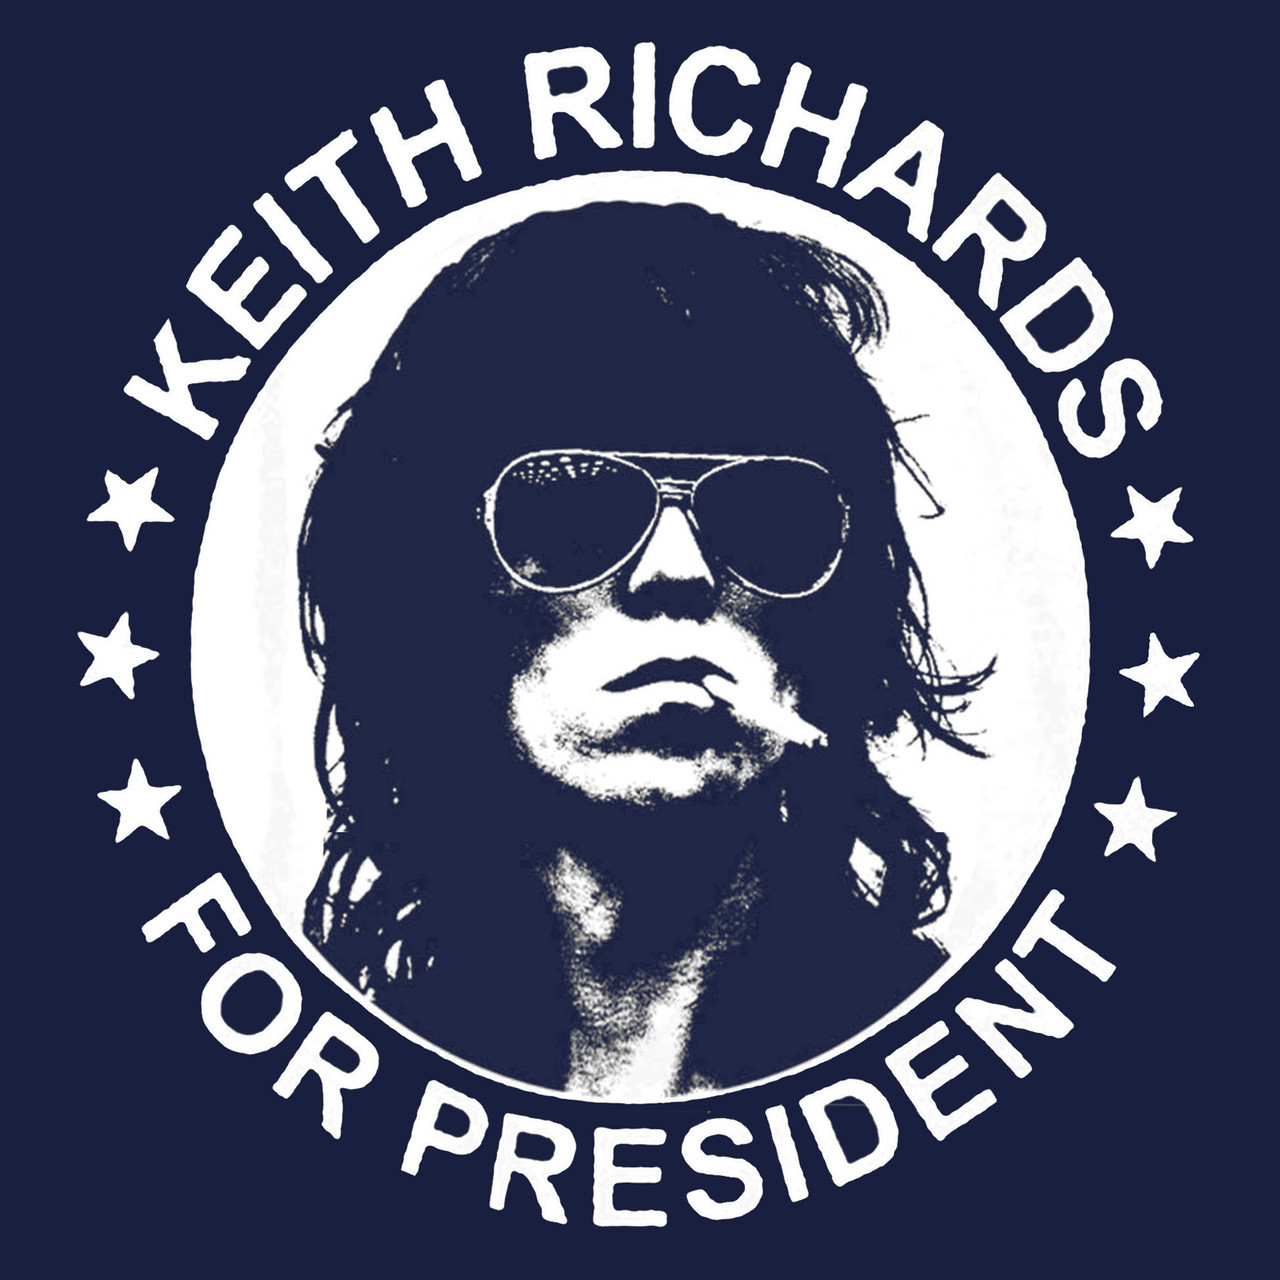 Keith Richards President T Shirt - BlackSheepShirts